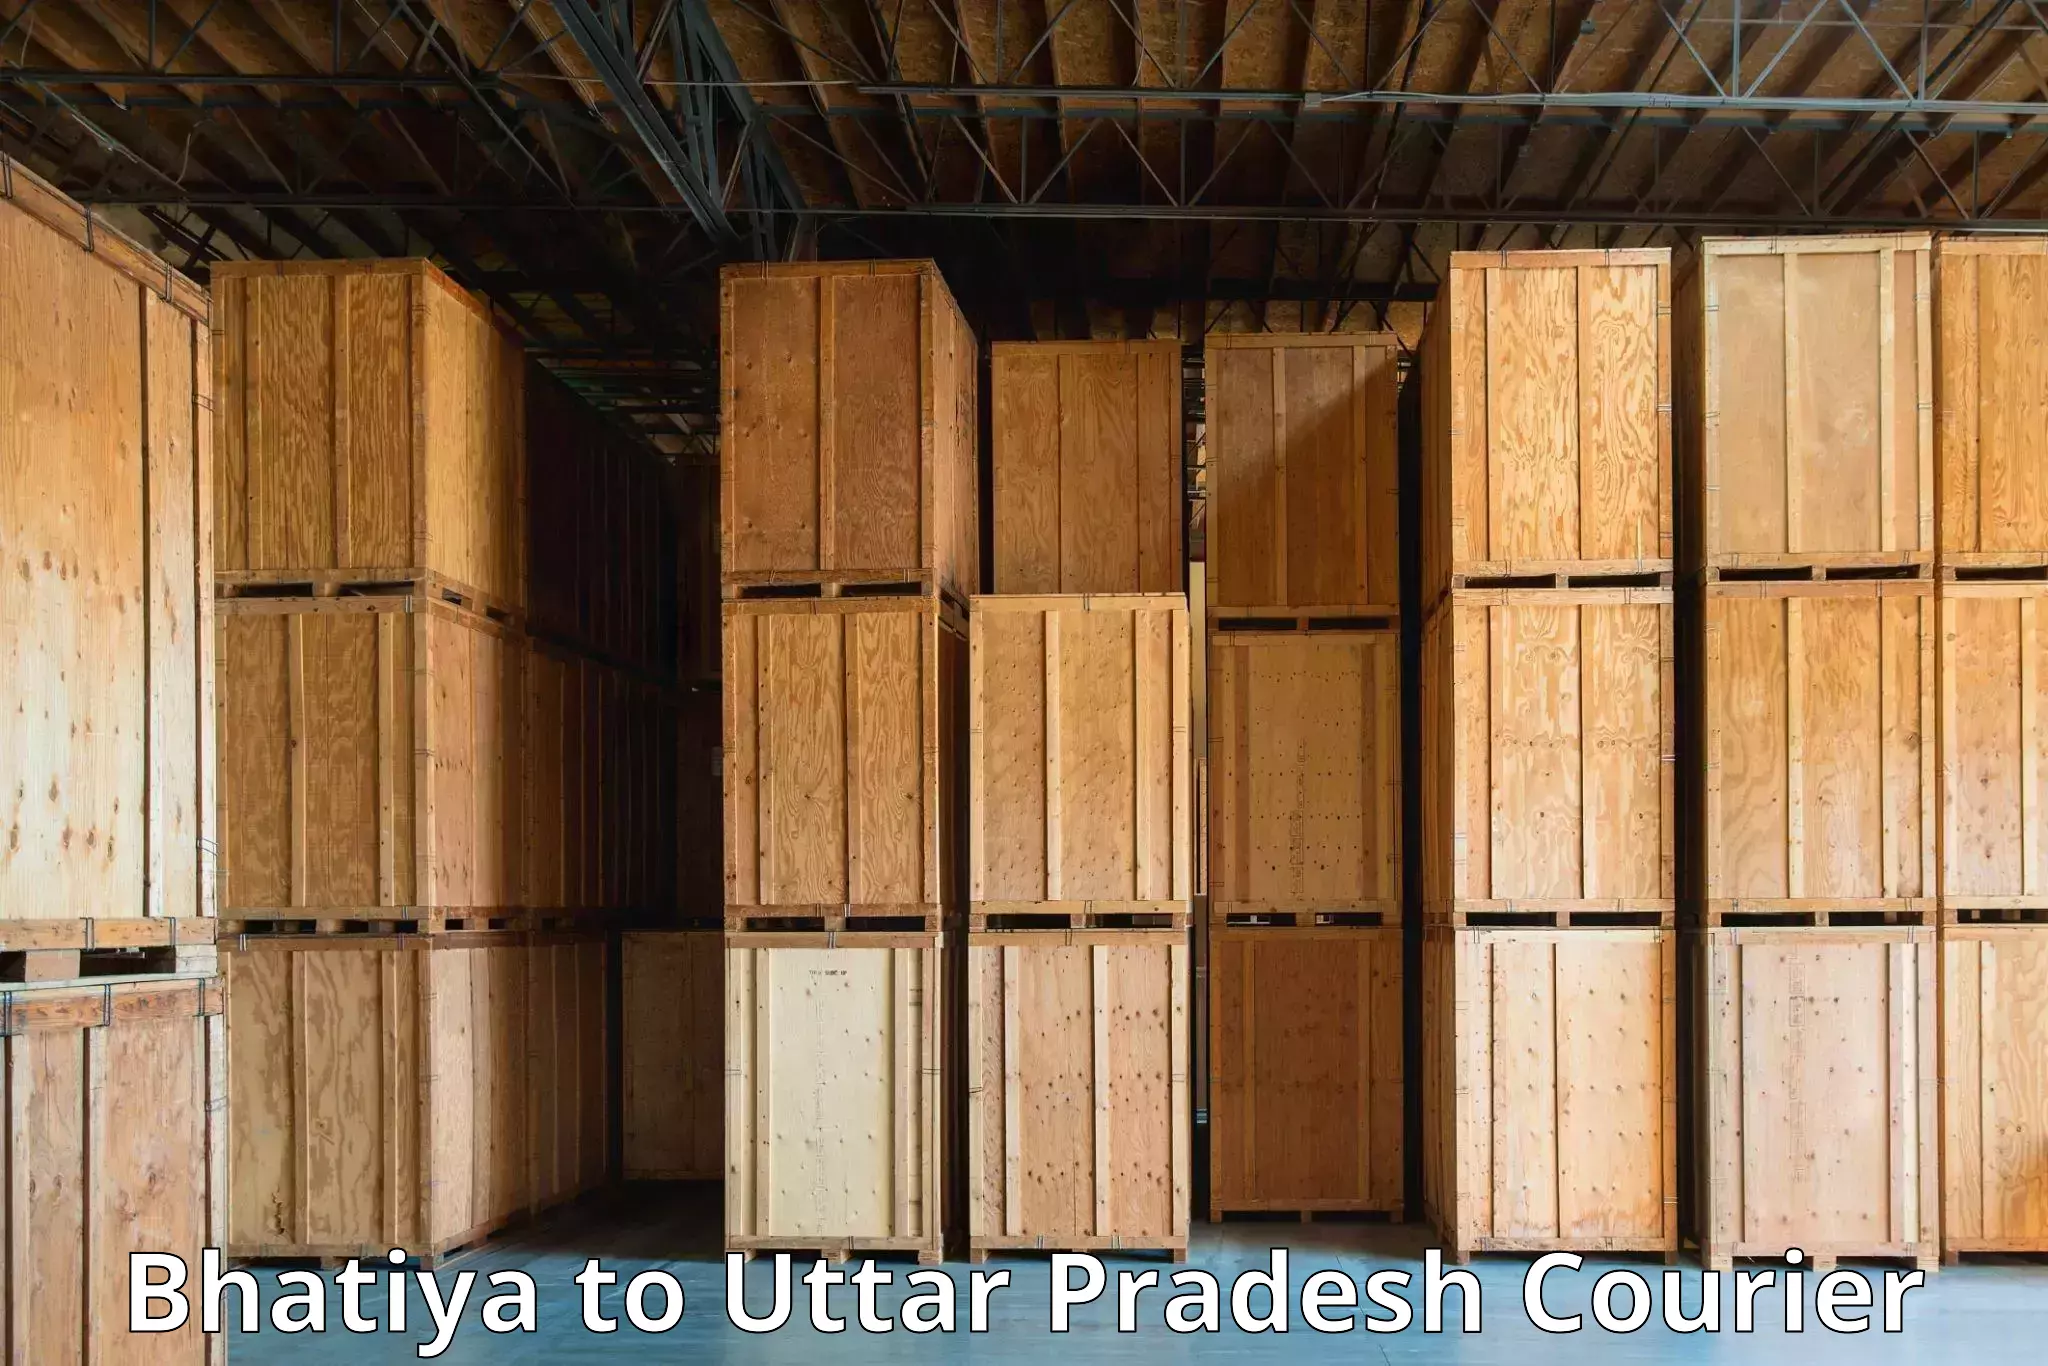 Pharmaceutical courier Bhatiya to Agra